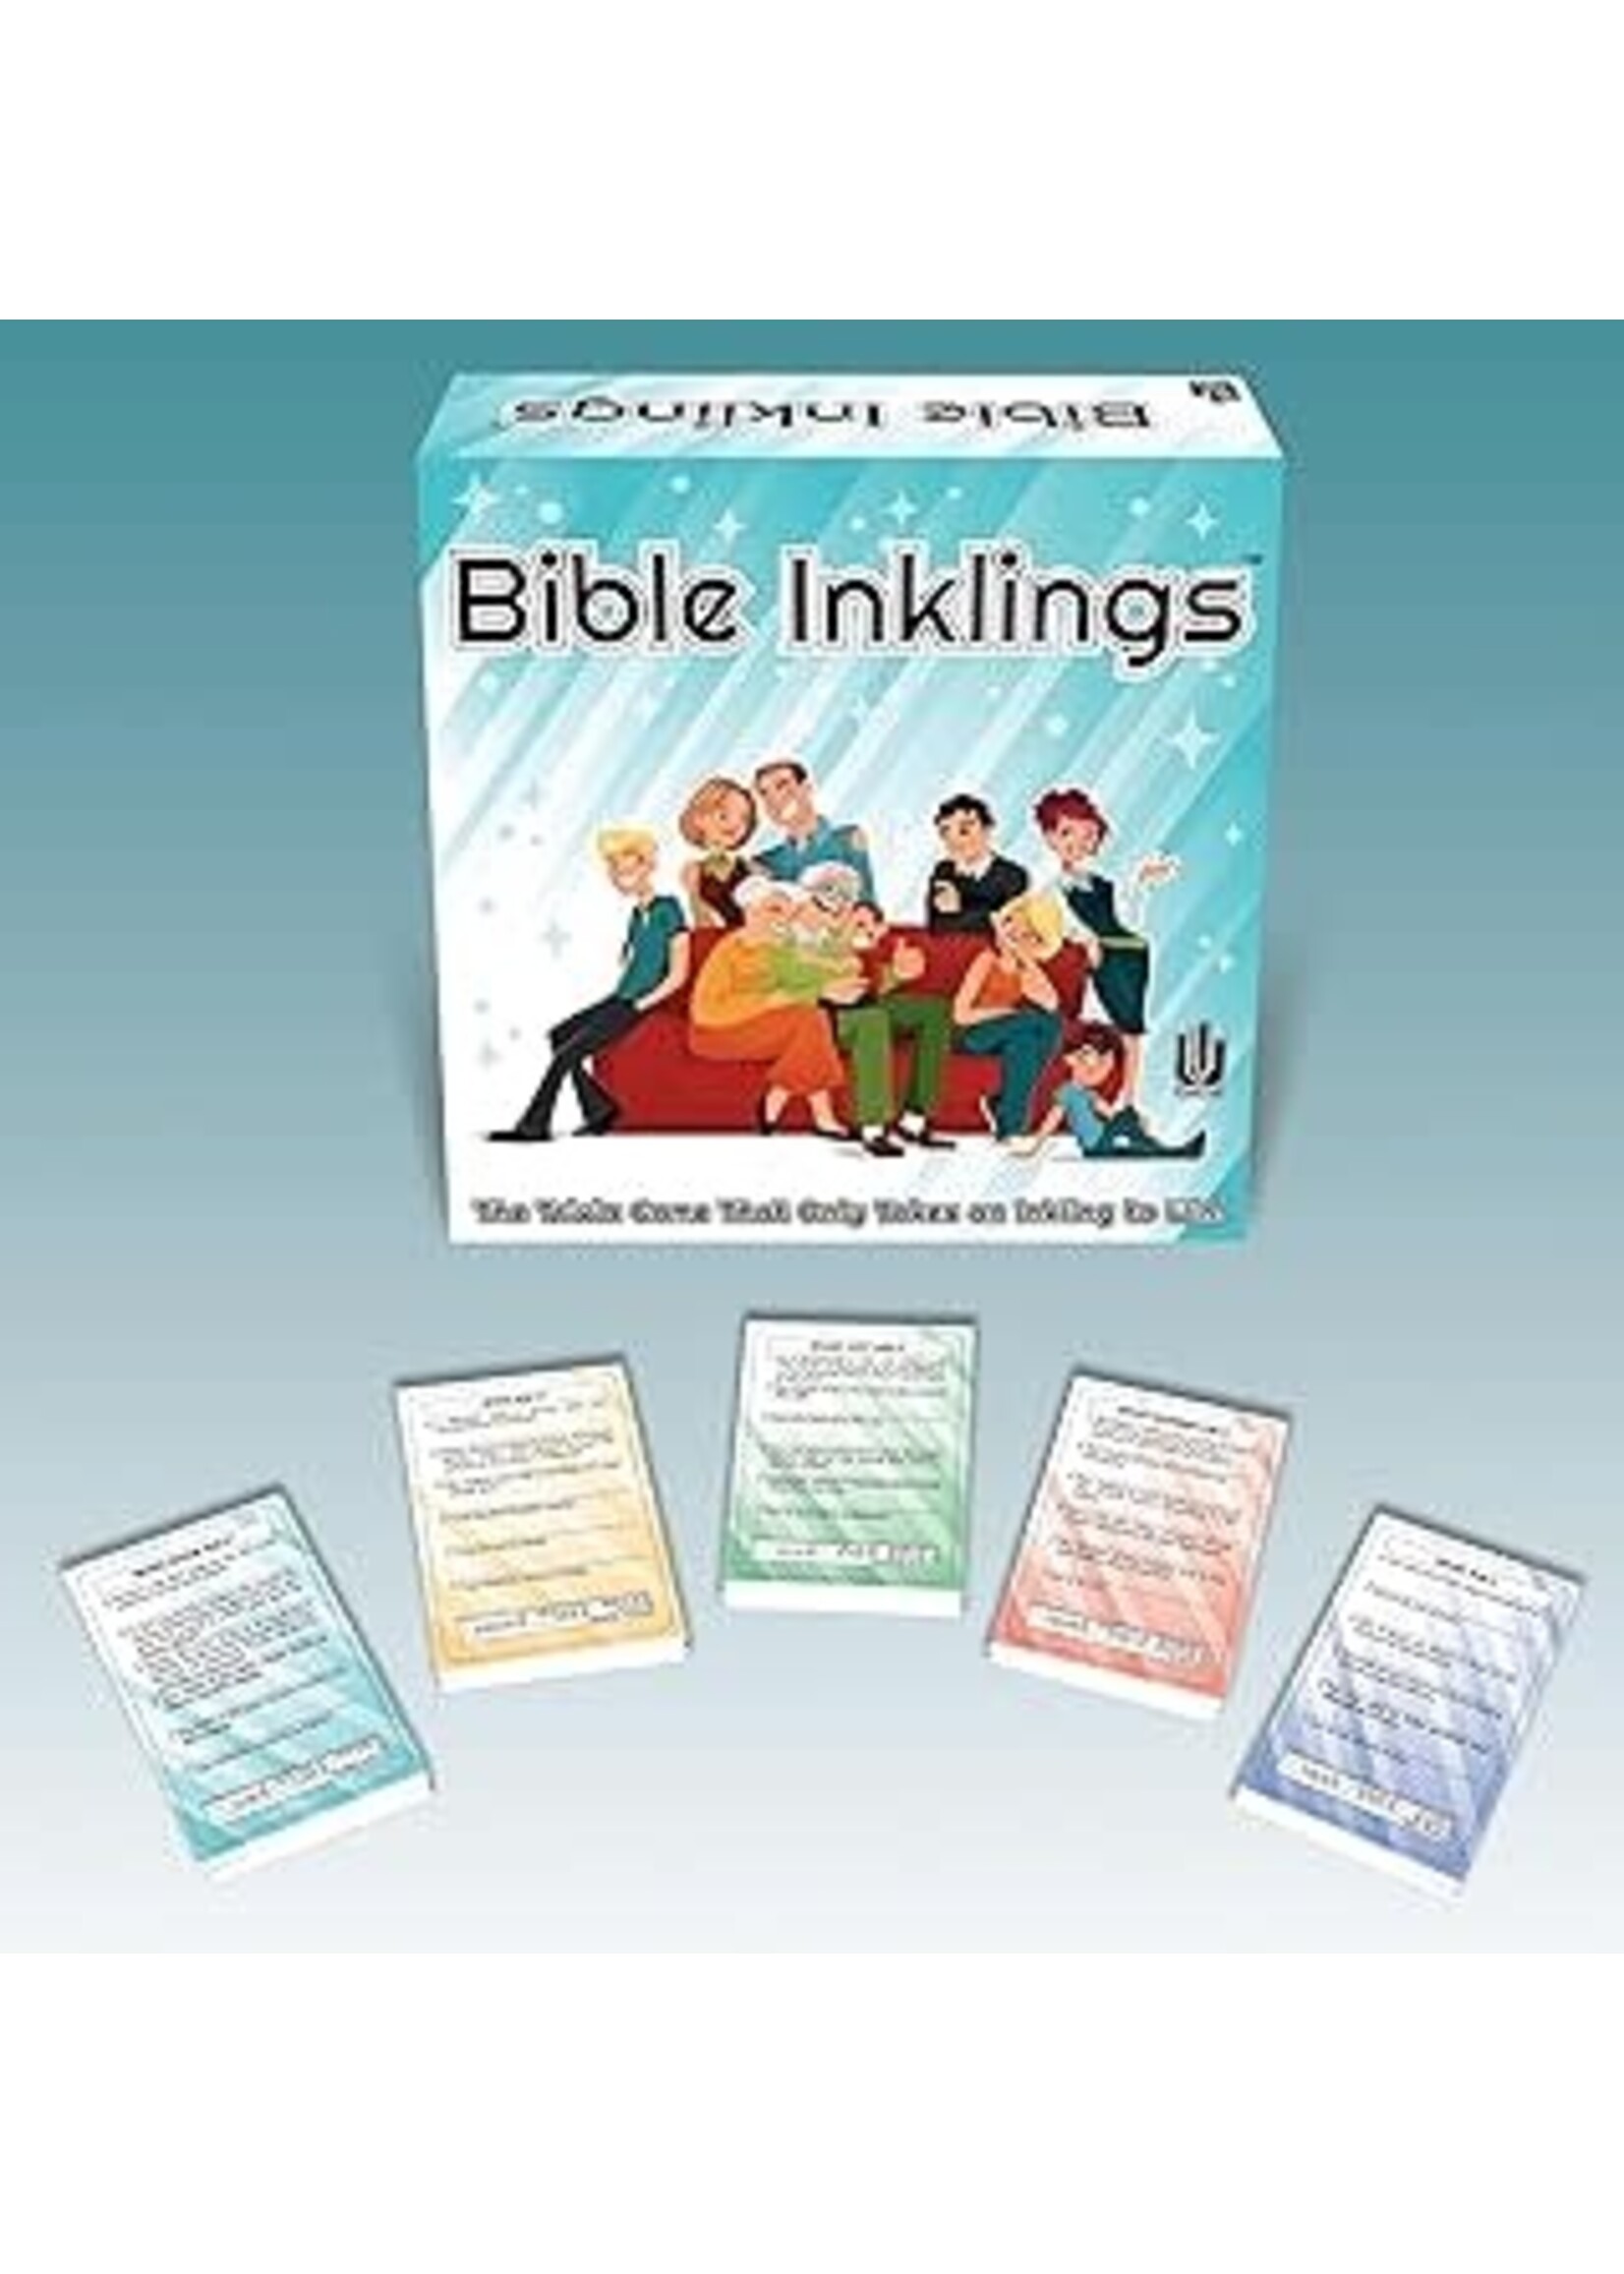 Bible Inklings Trivia Game